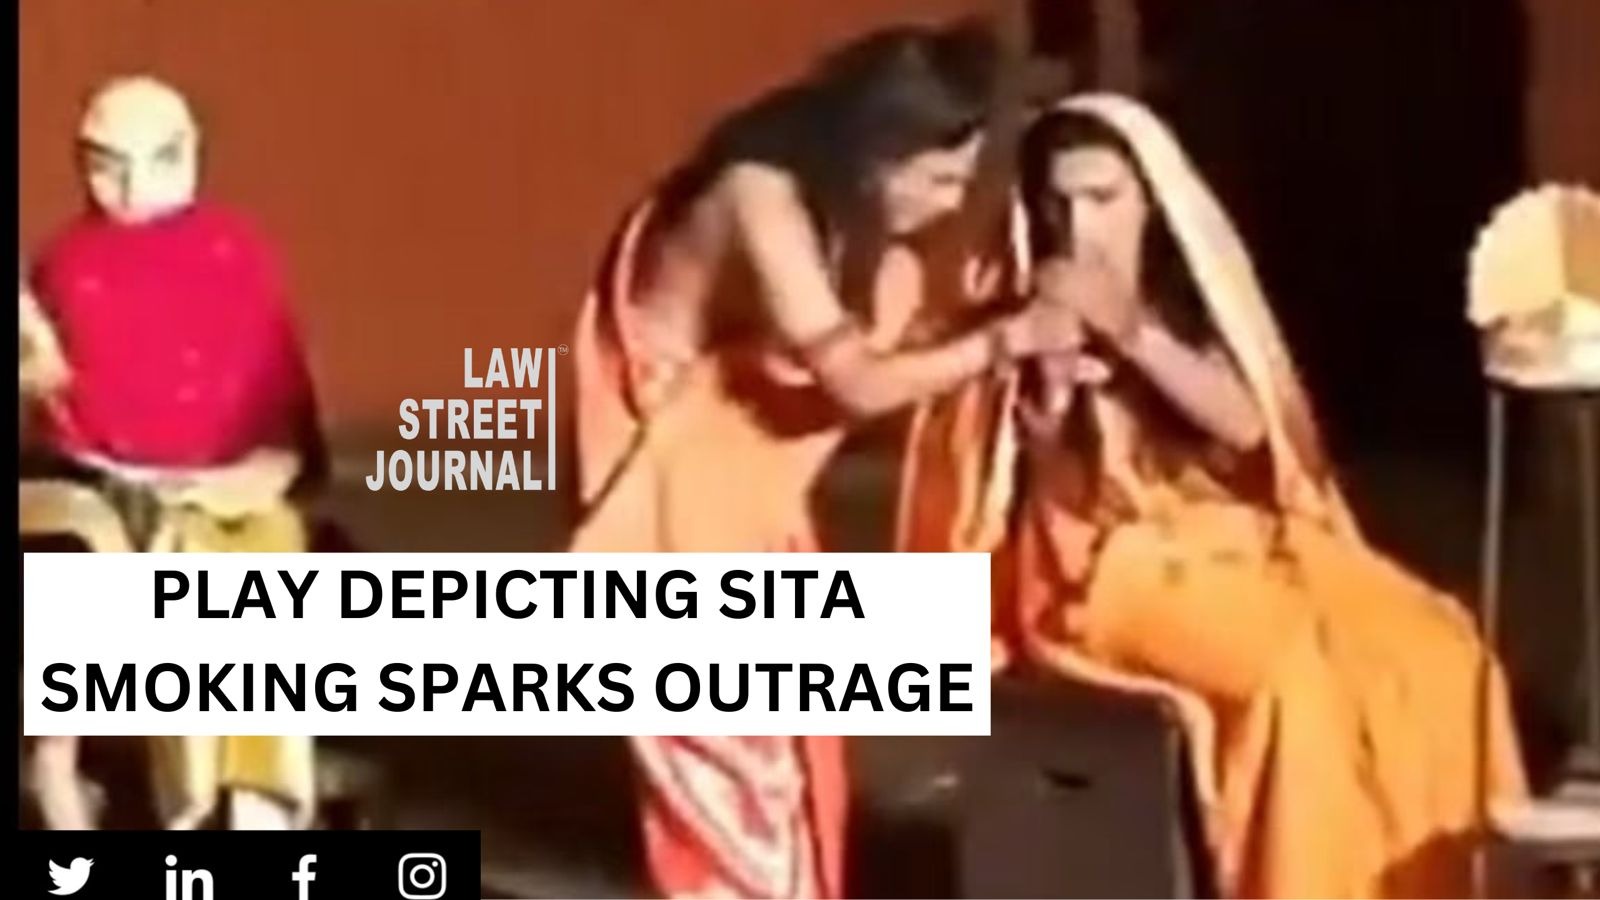 Goddess Sita smoking in 'Ramlila' performance: University professor, 5 students arrested